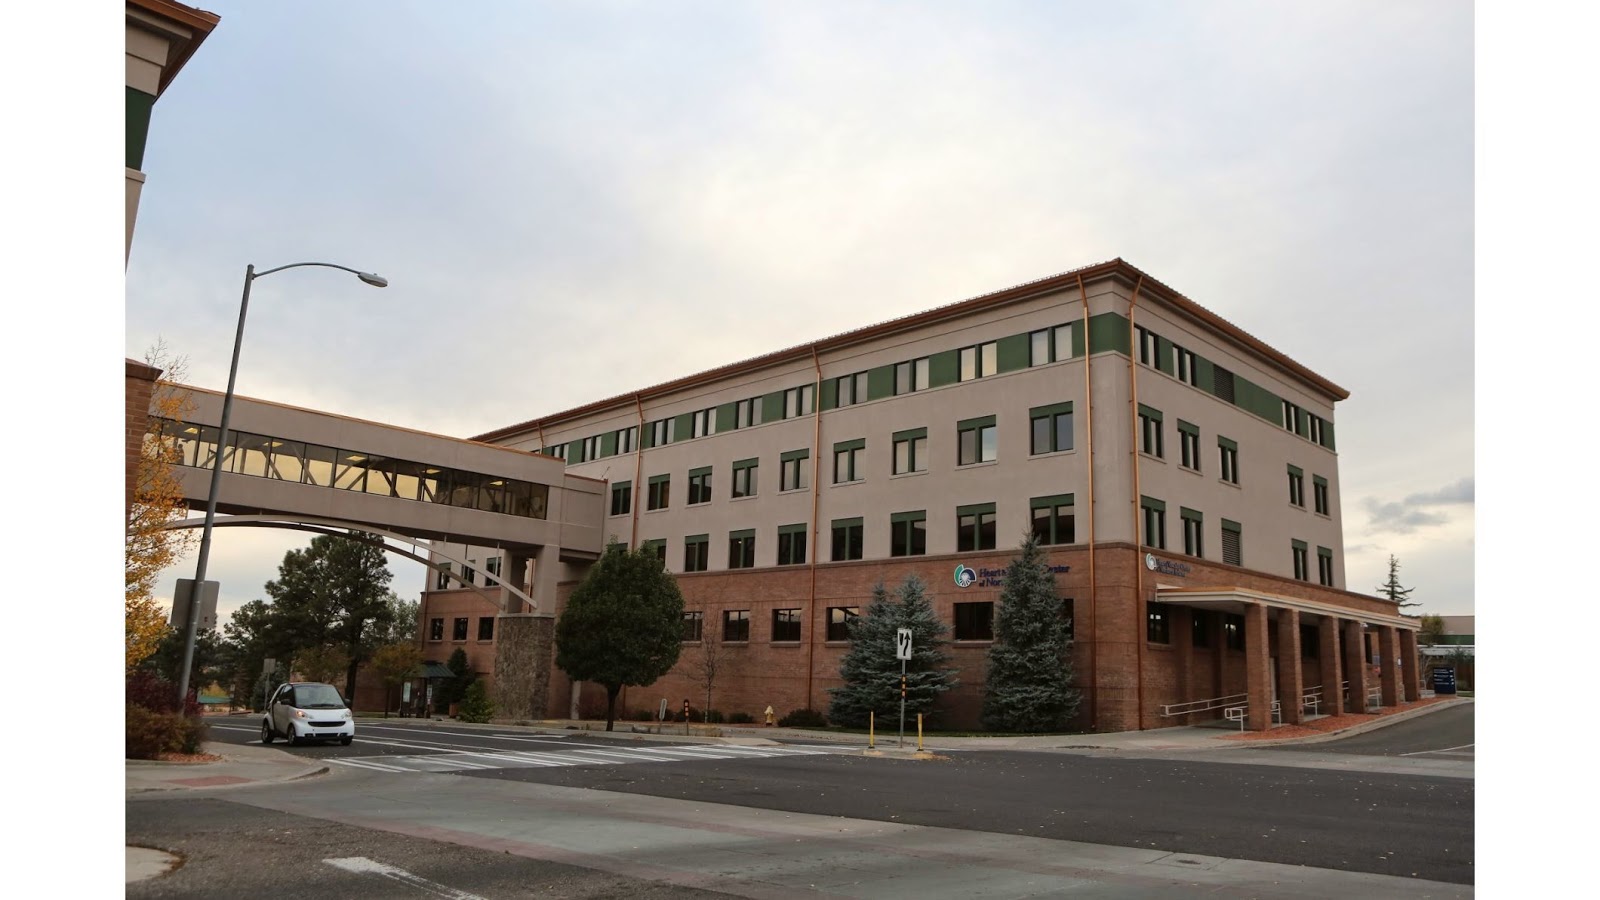 Flagstaff Medical Center - Behavioral Health Services